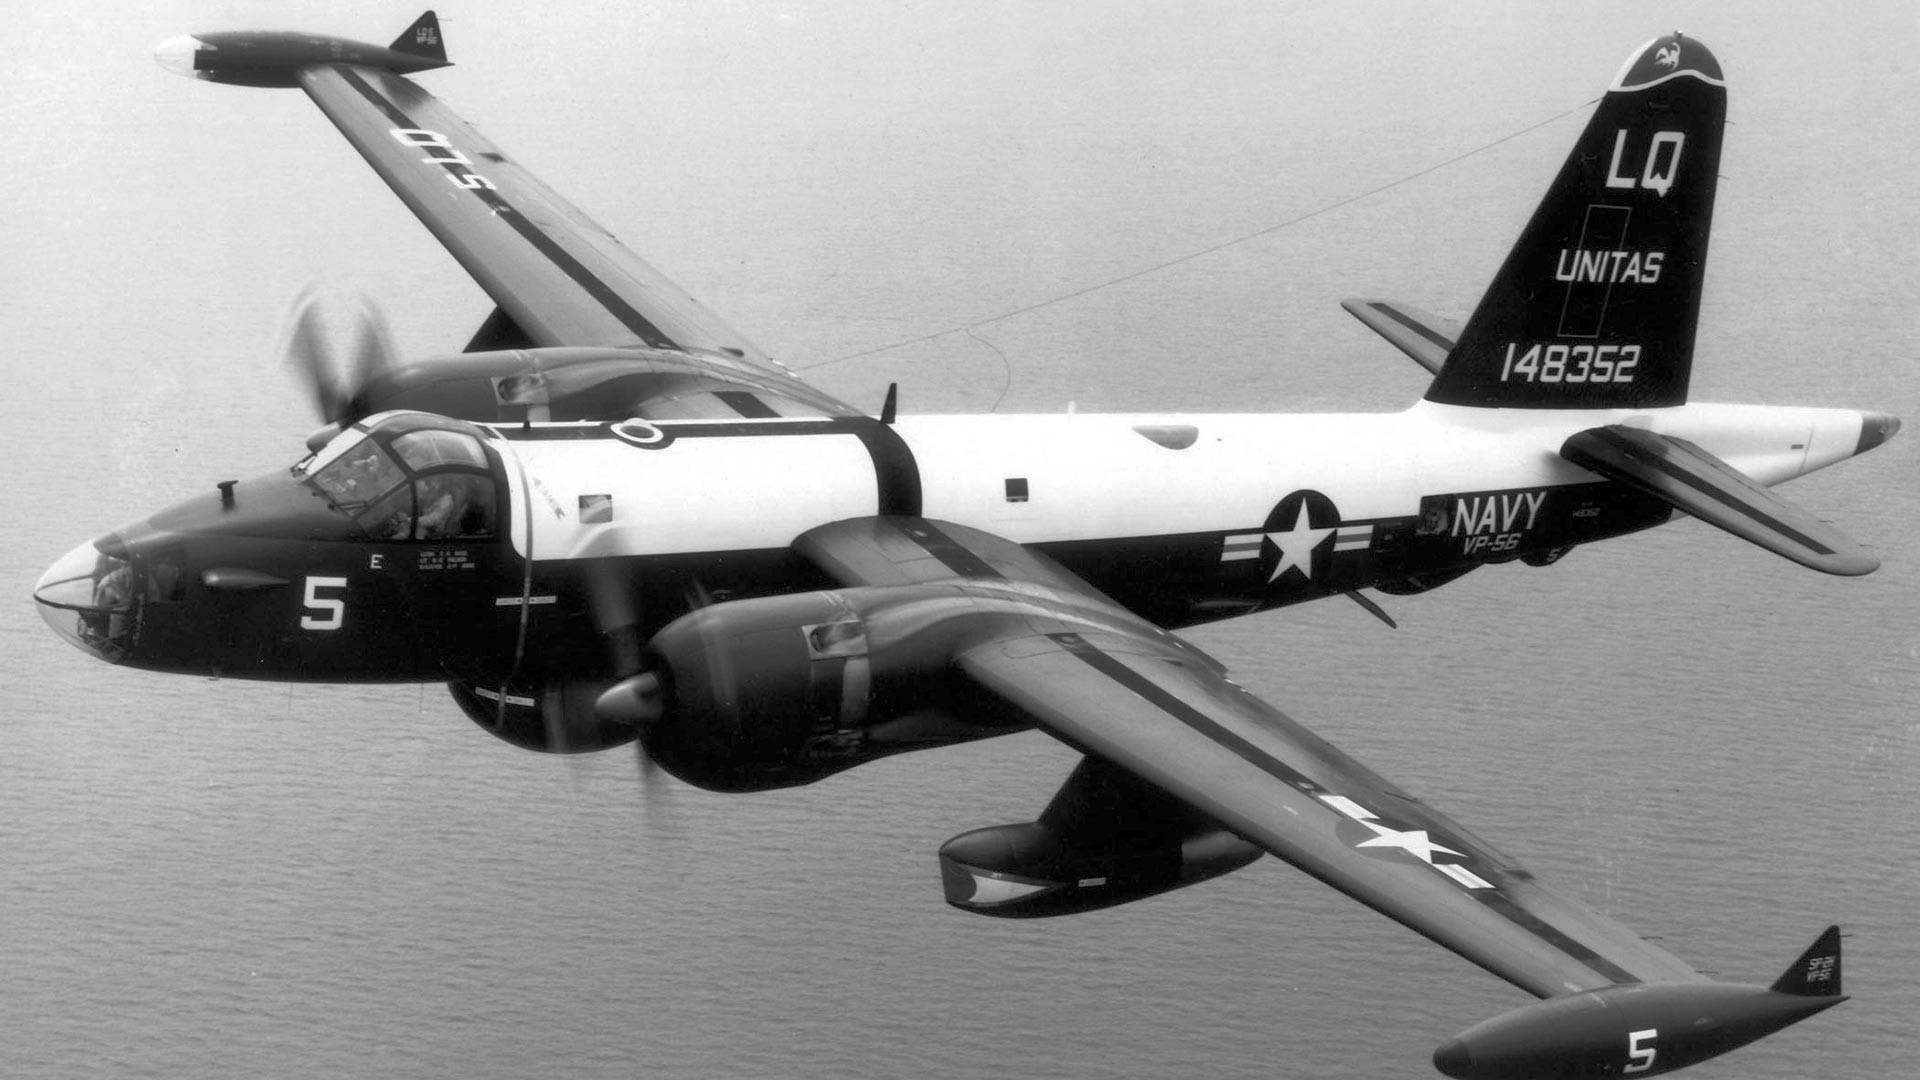 Lockheed P-2 Neptune reconnaissance aircraft.